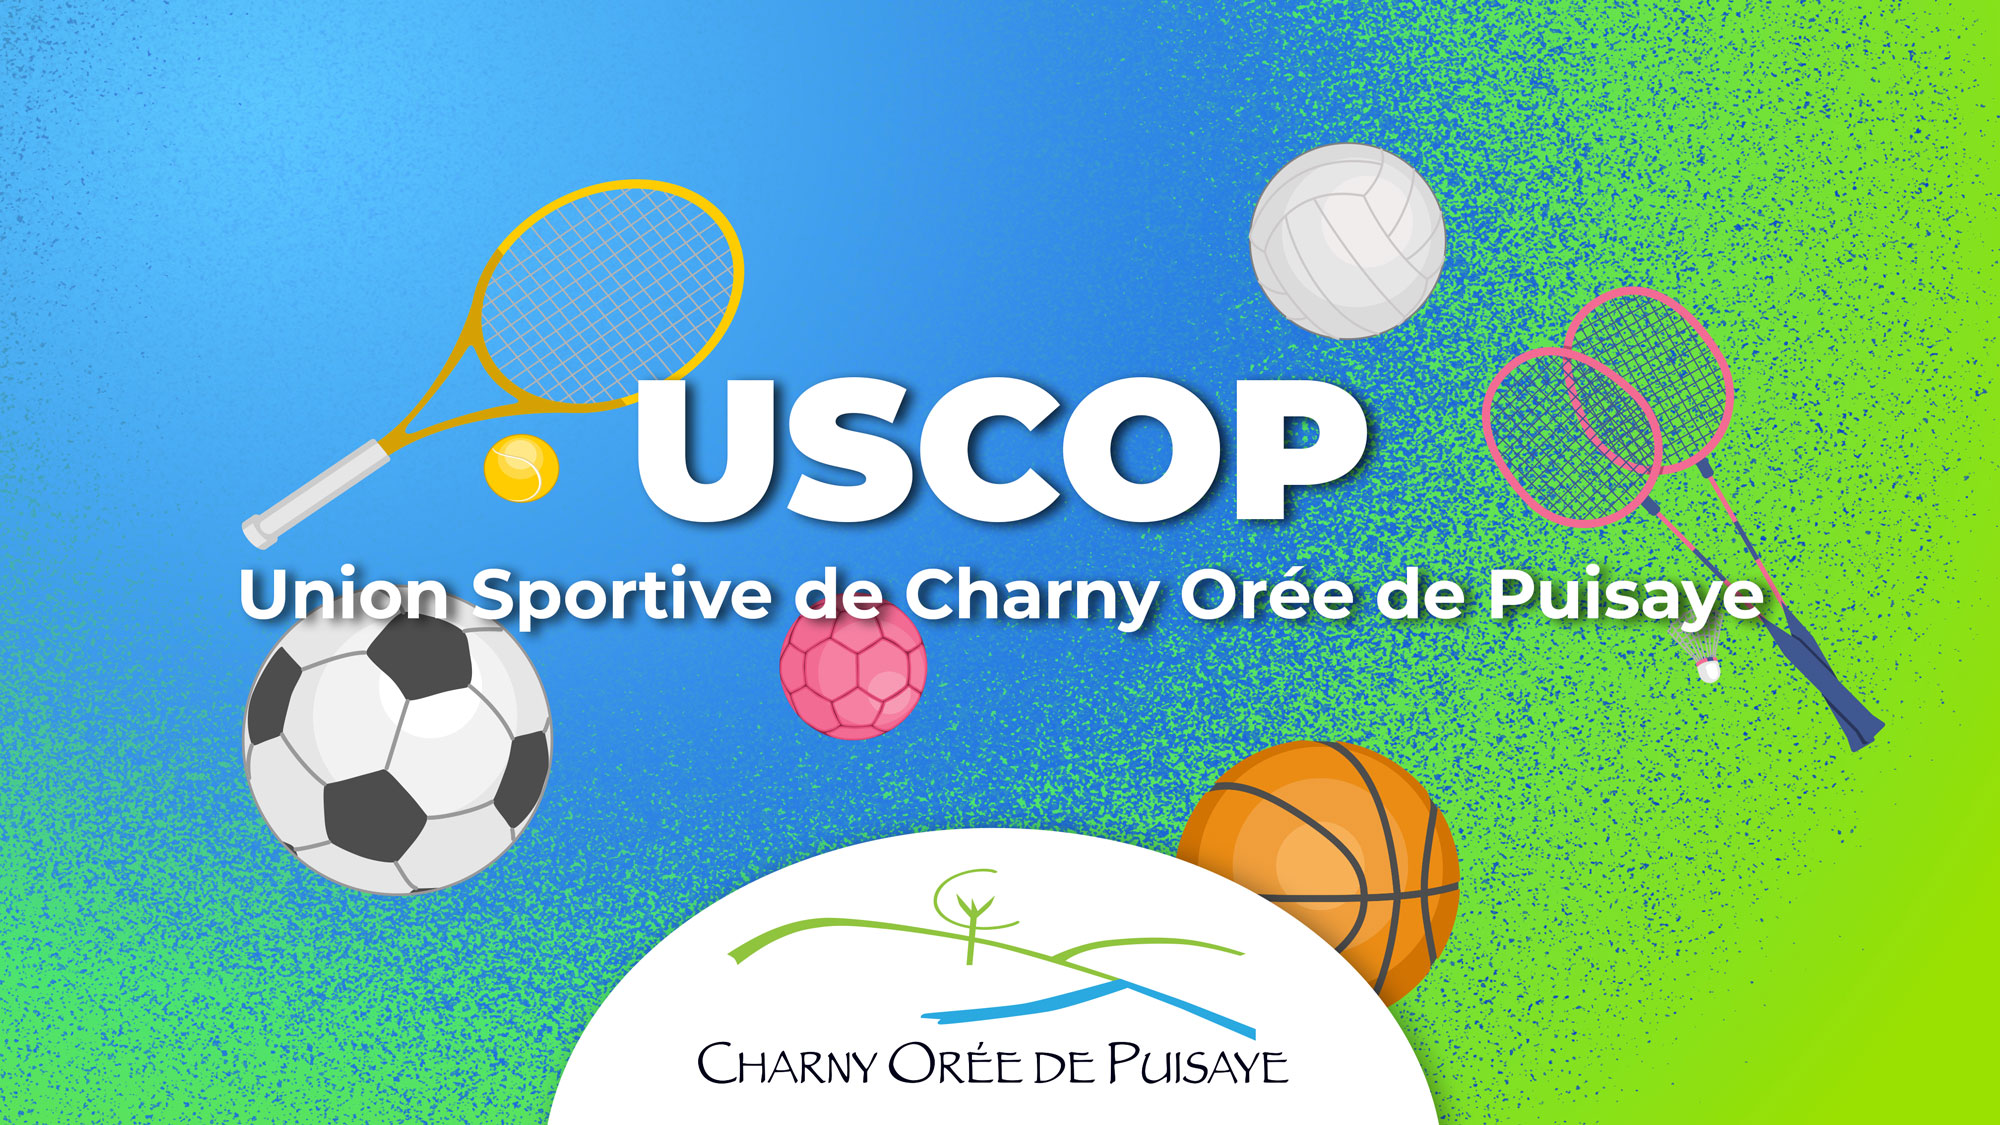 USCOP Union Sportive